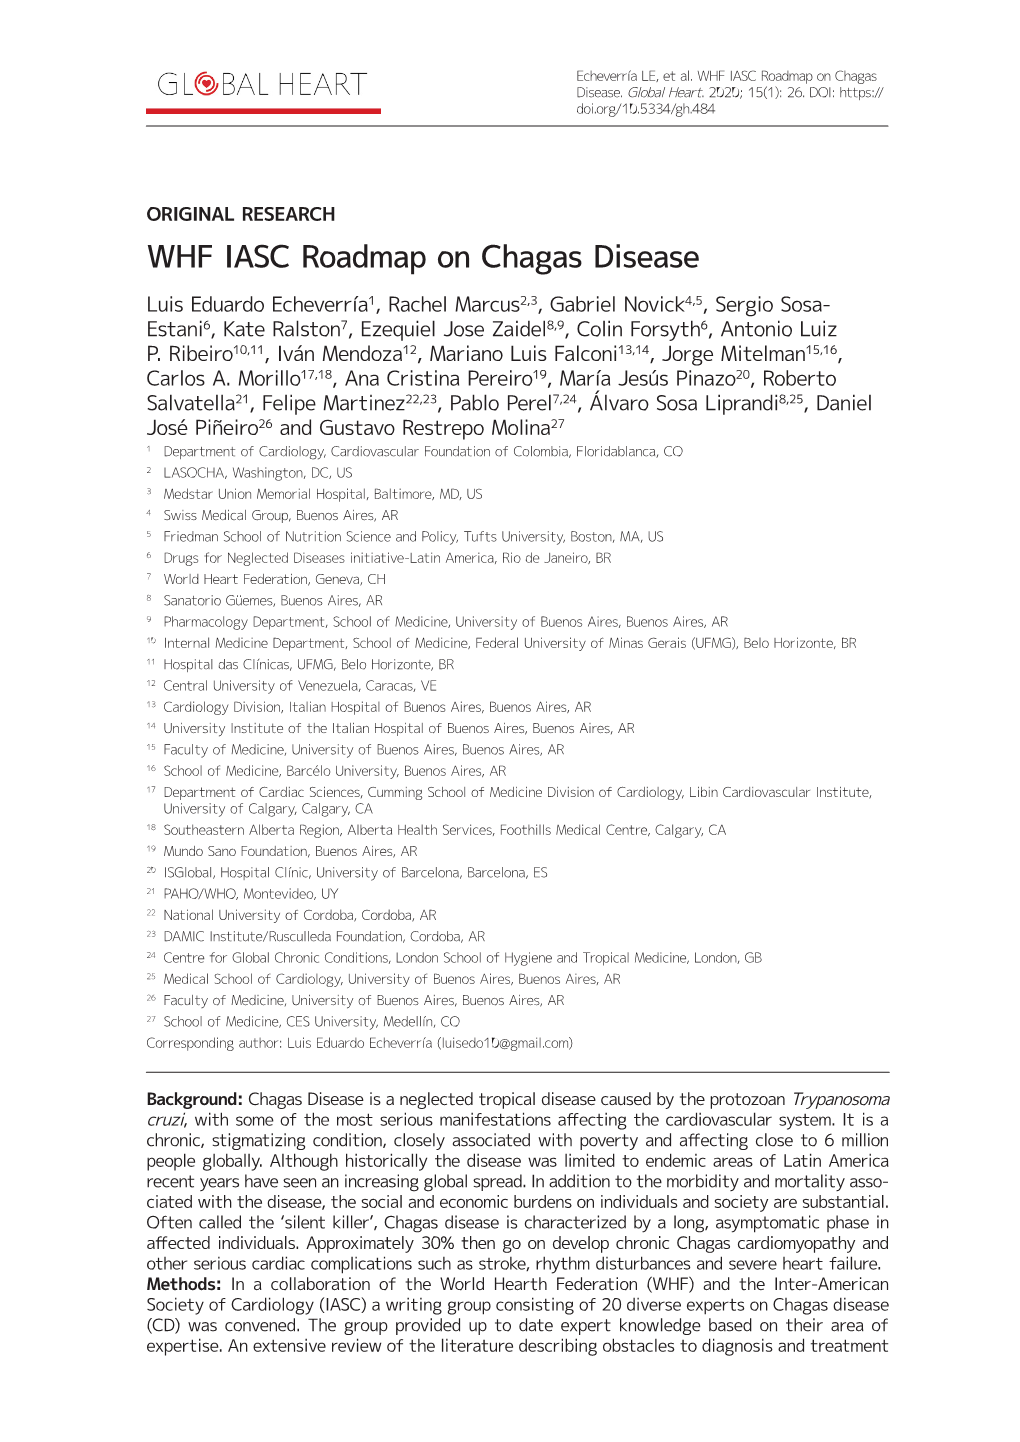 WHF IASC Roadmap on Chagas Disease